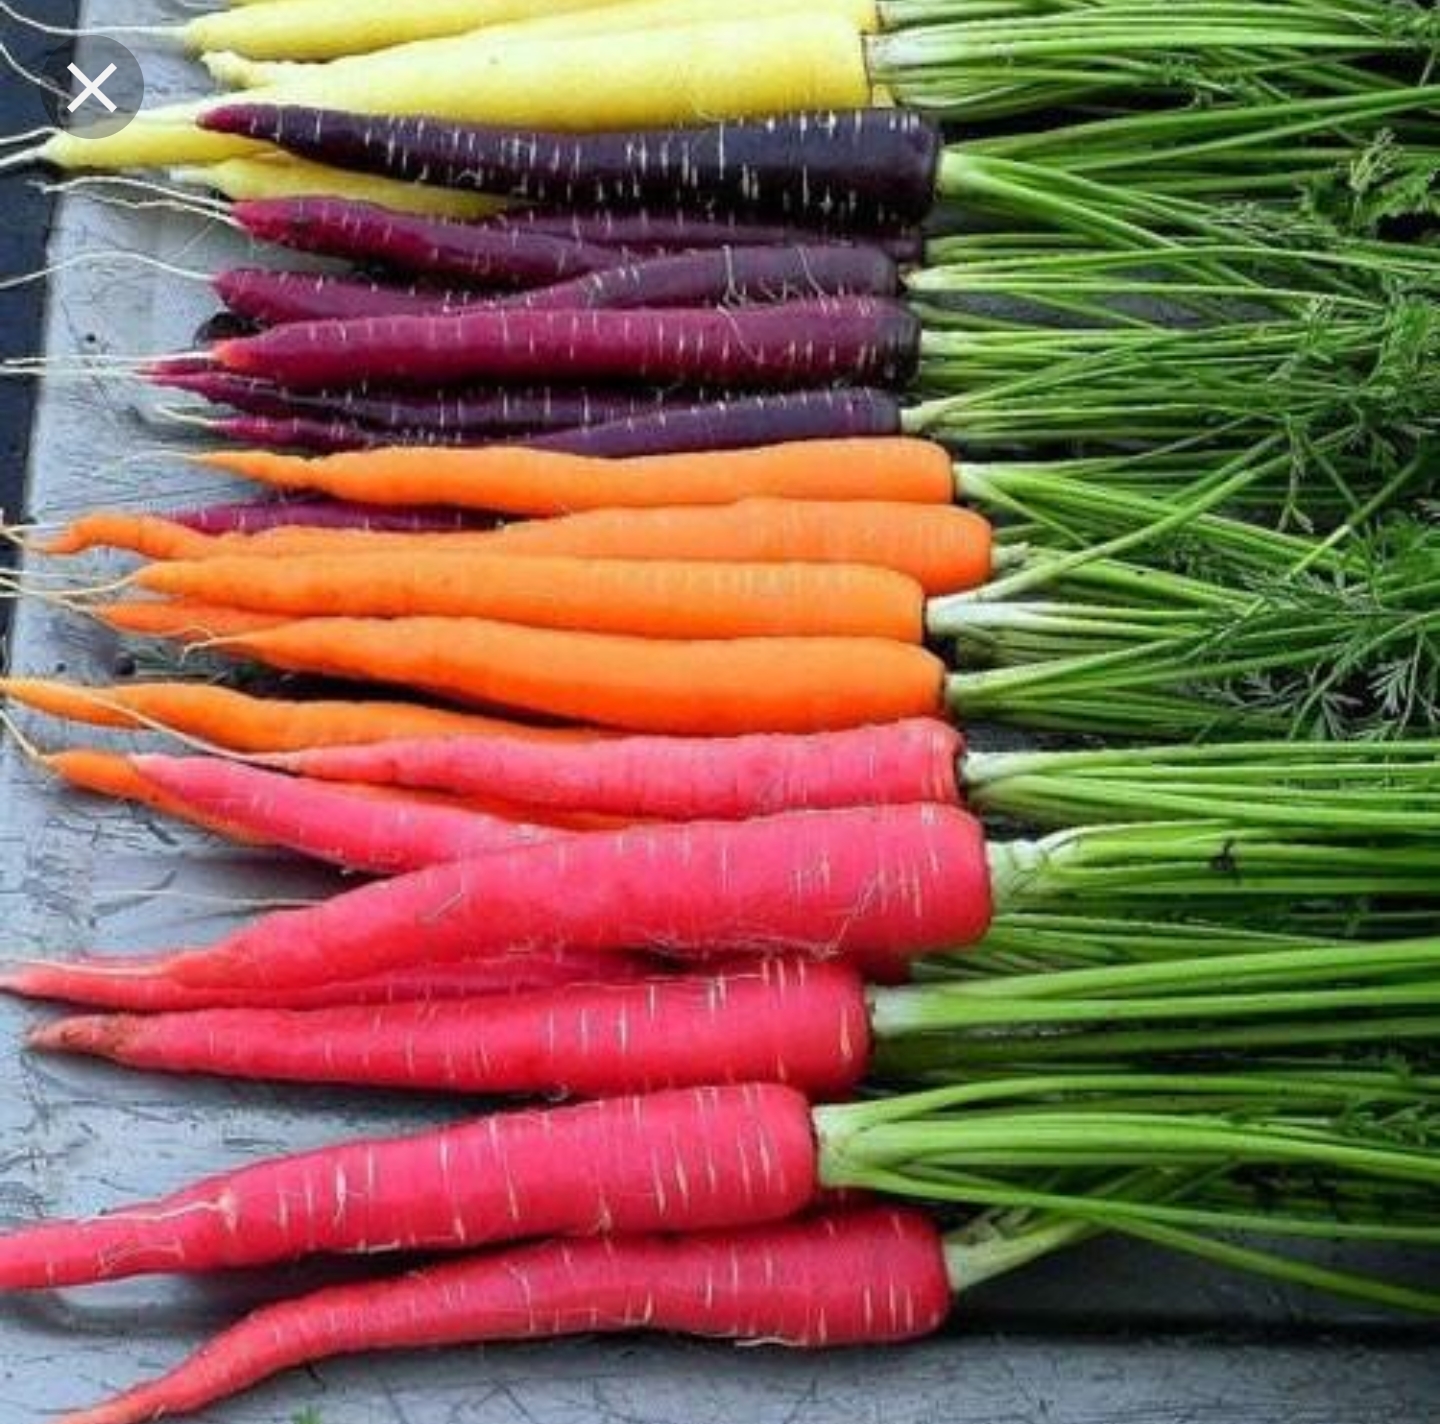 memes - rainbow carrots